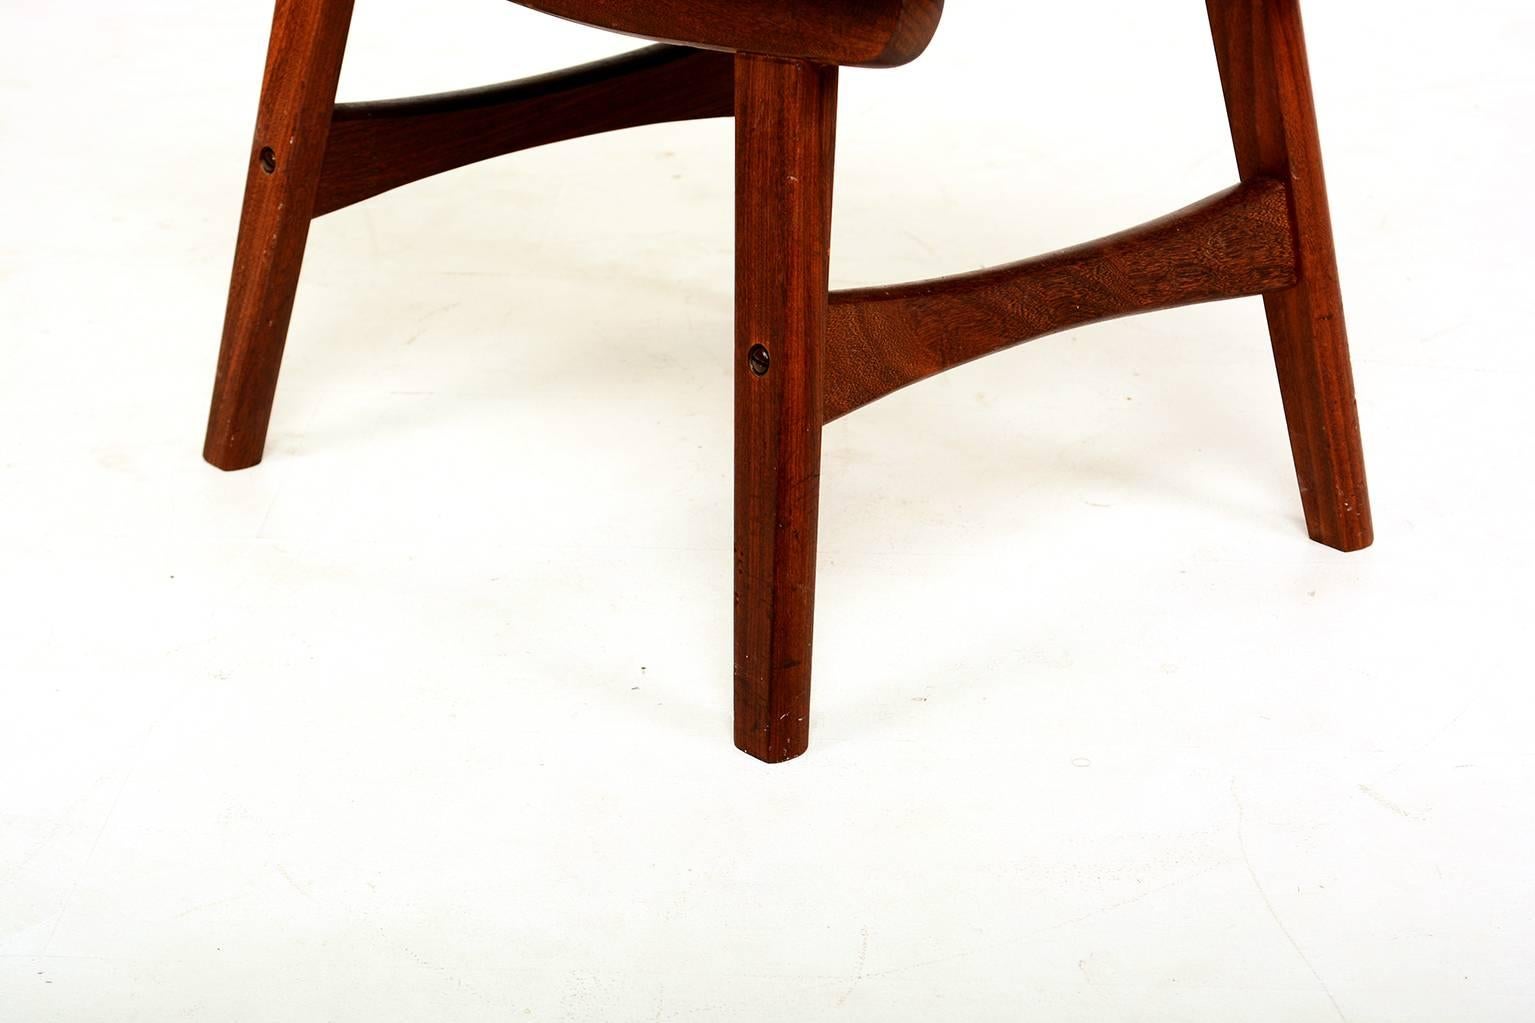 Oiled Mid Century Danish Modern Teak Stool with leather seat.